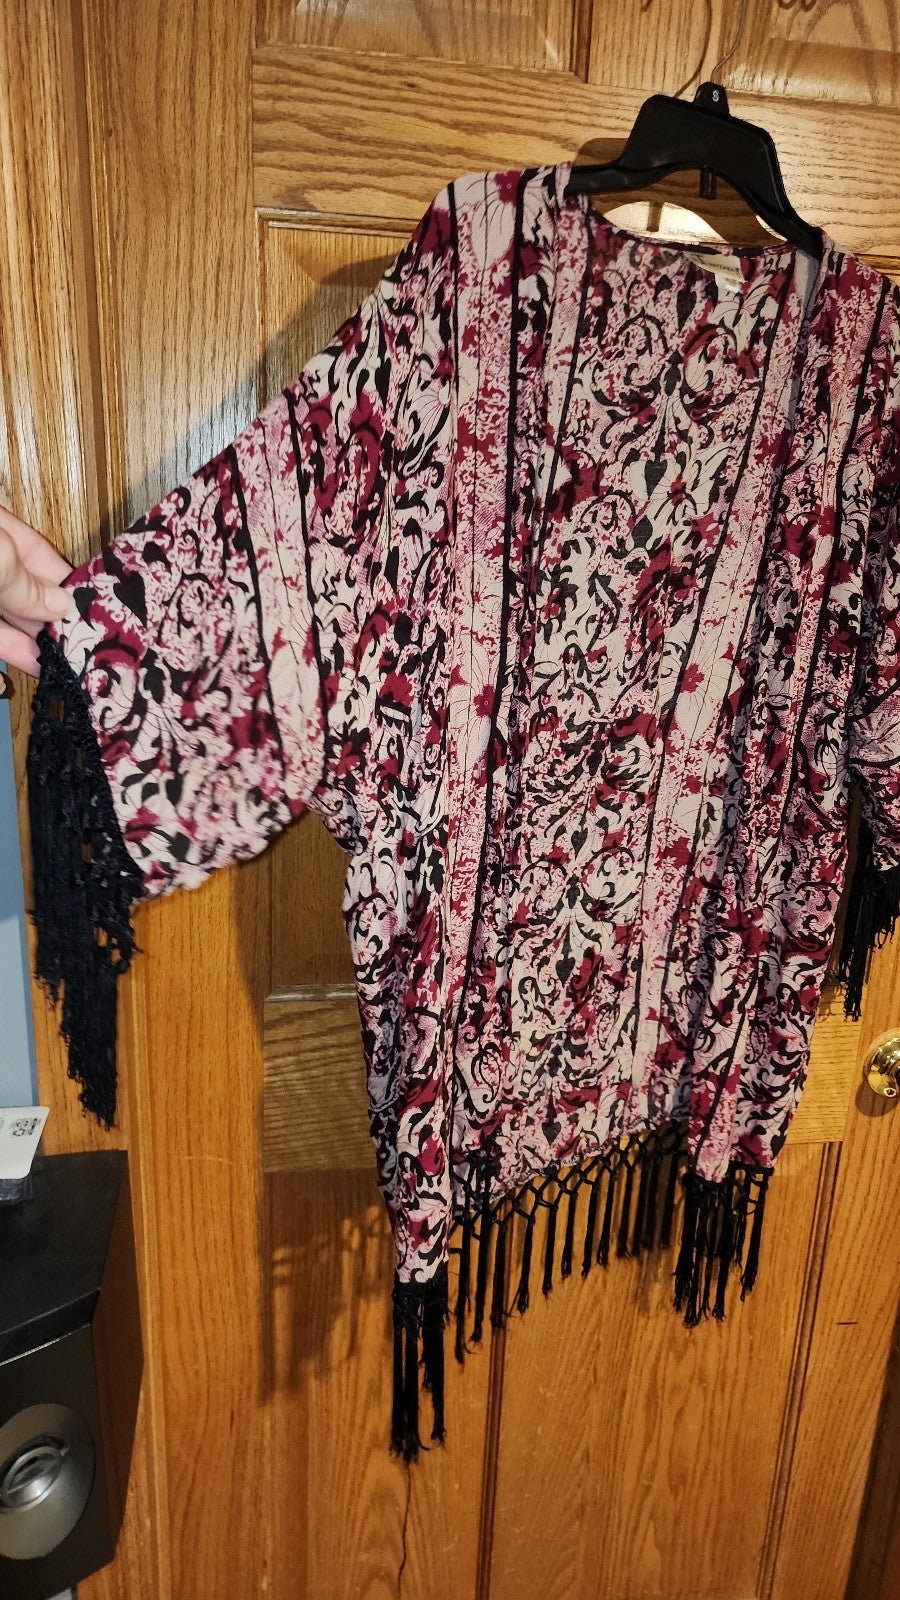 Stylish Tanzara Rayon Open Fringed Kimono Coverup Size Medium BoHo PeARdTXSX on sale